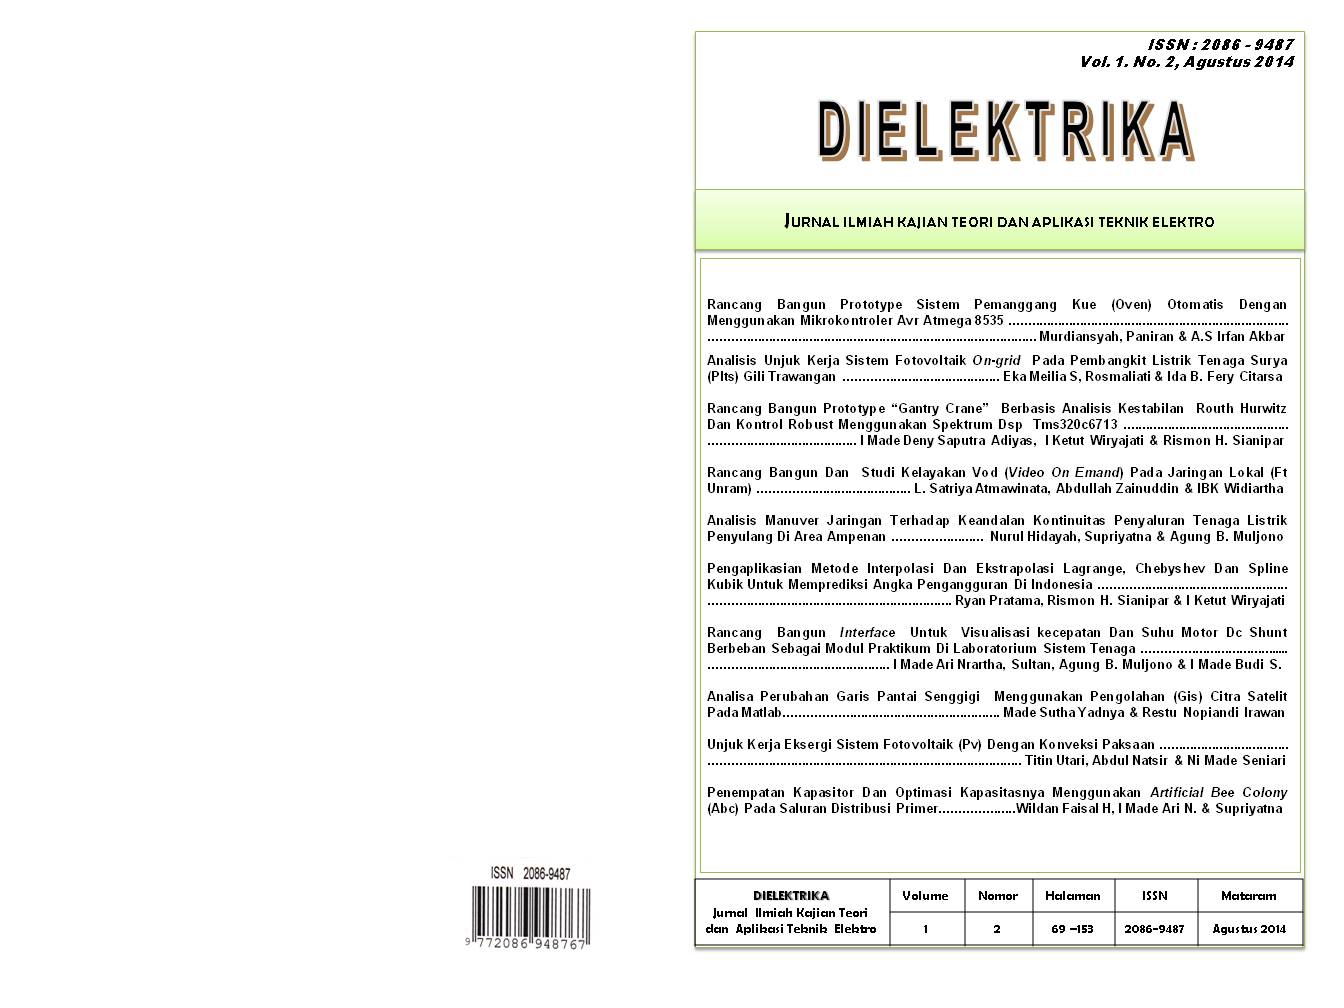 					View Vol. 1 No. 2 (2014): DIELEKTRIKA
				